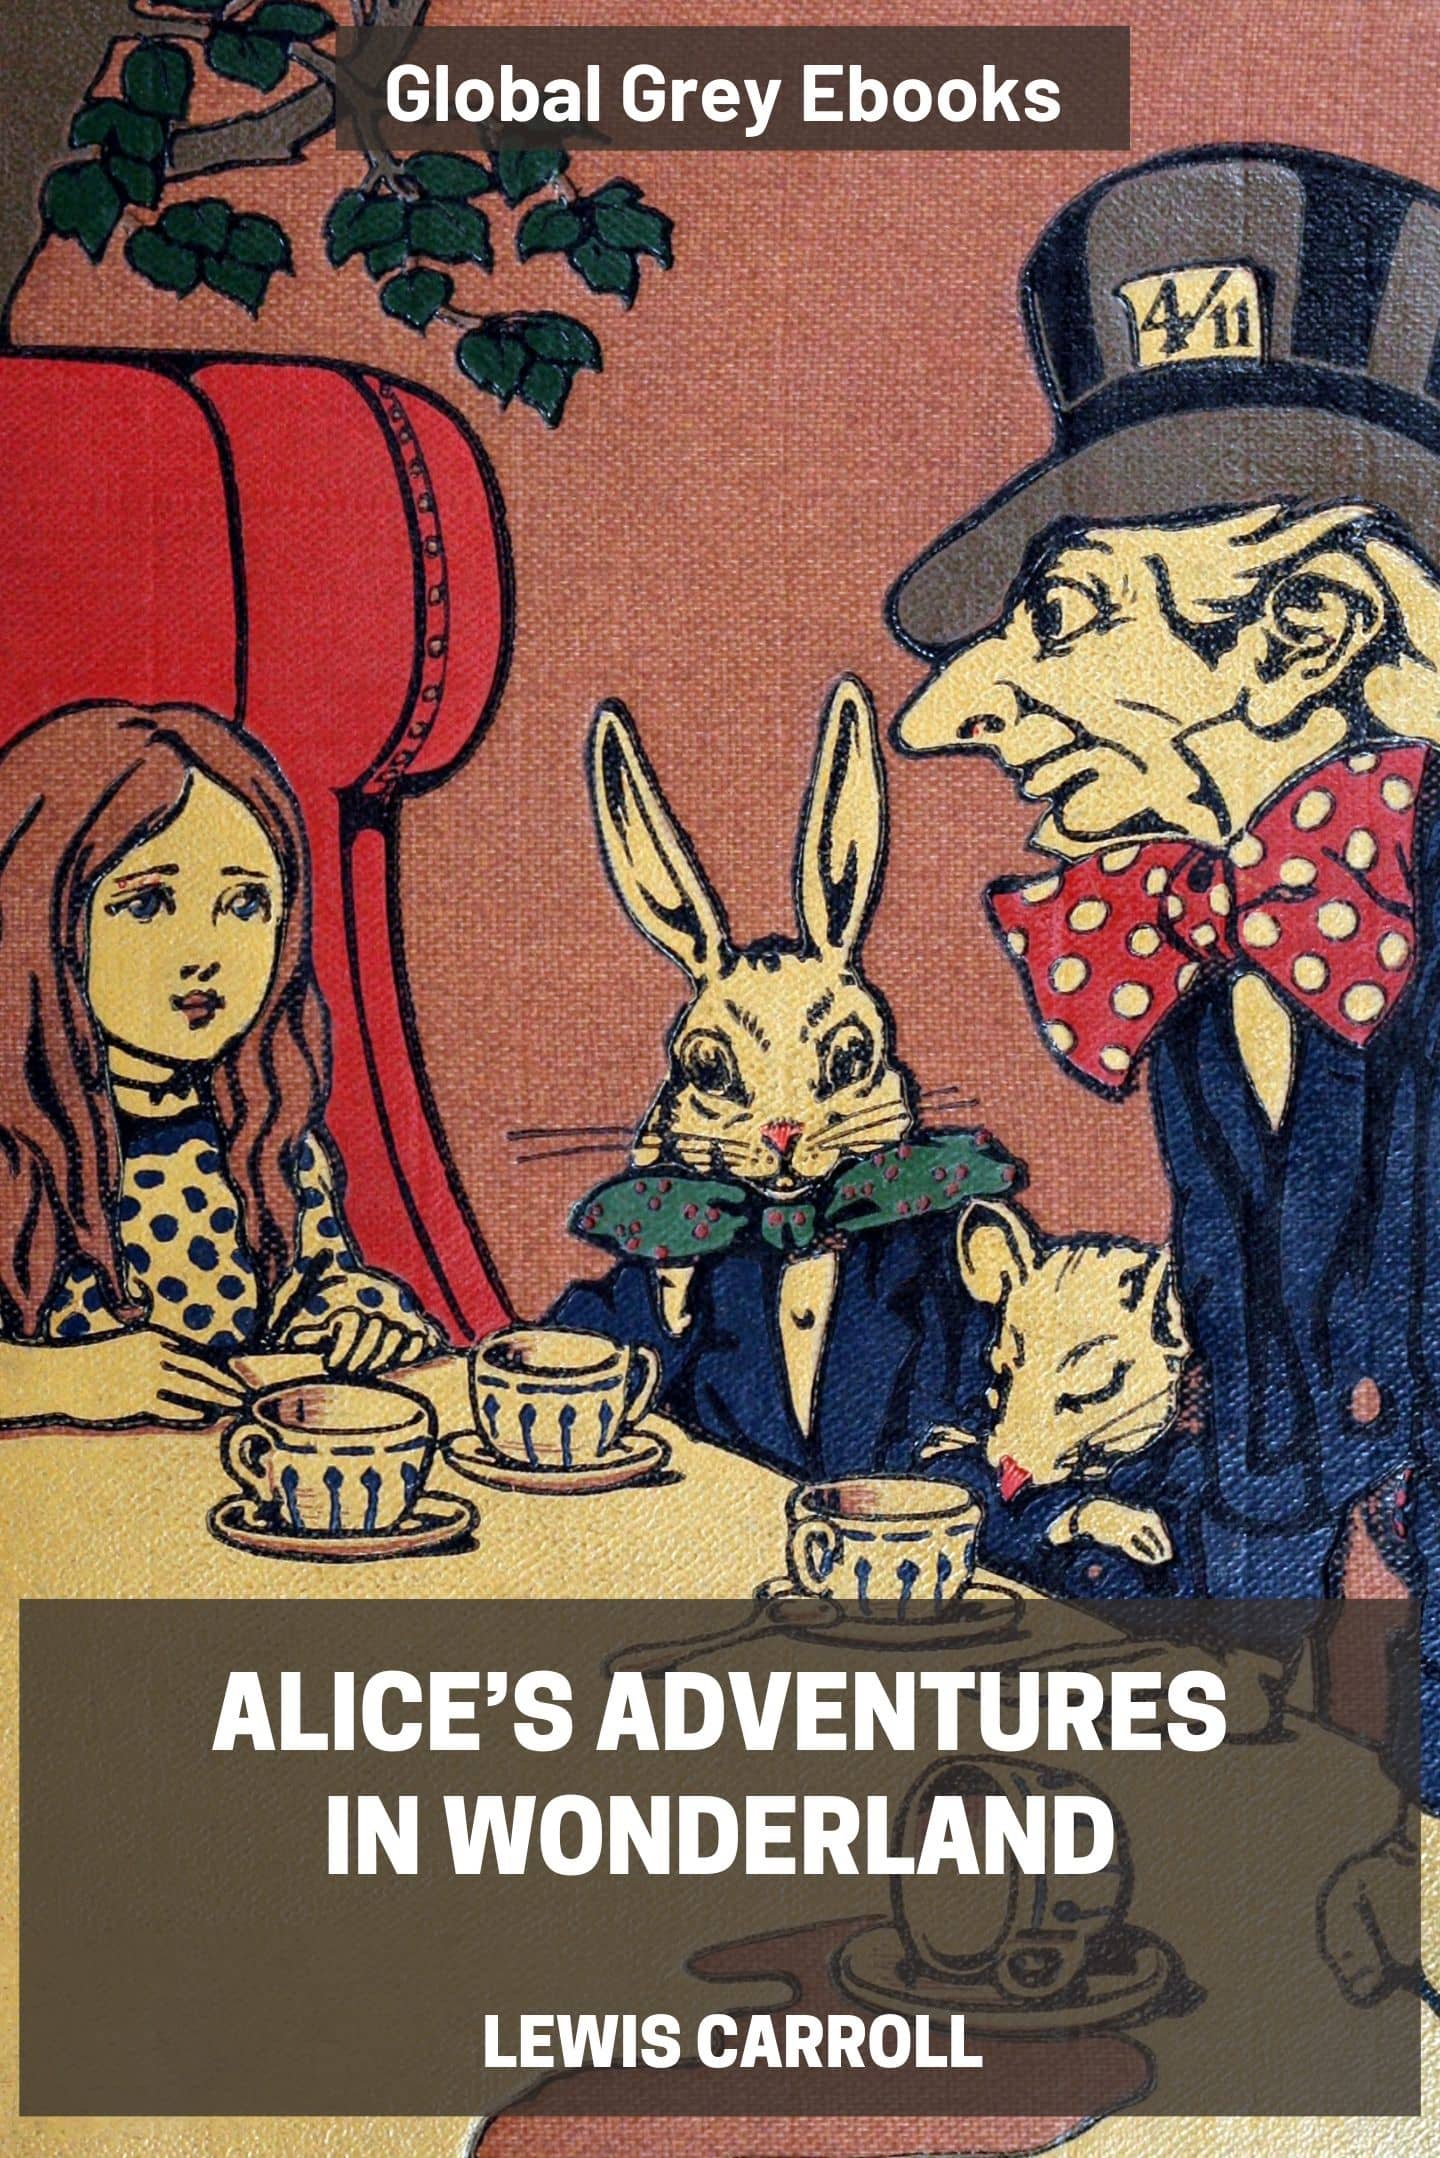 Alice in Wonderland (Illustrated) ebook by Lewis Carroll - Rakuten Kobo